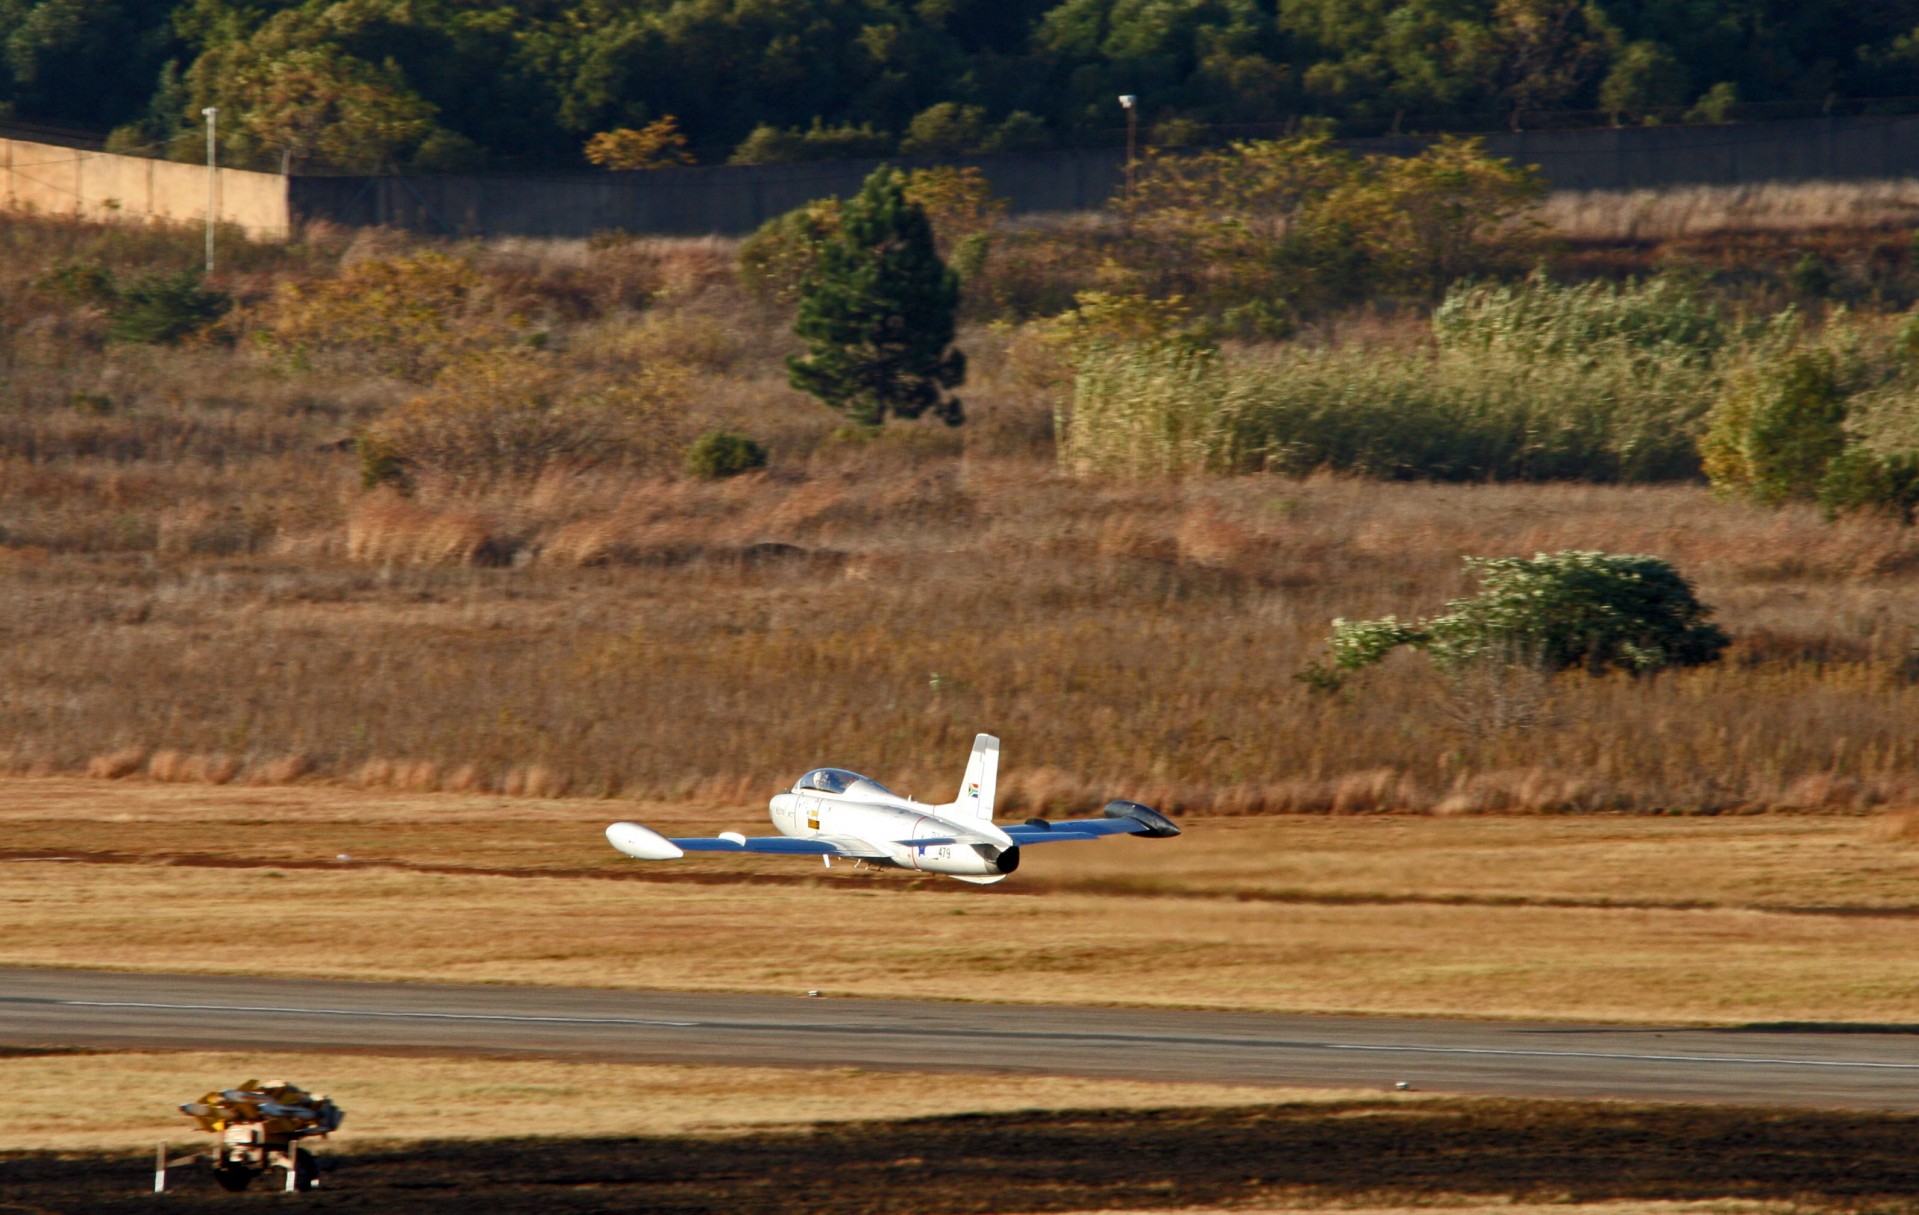 jet runway takeoff free photo